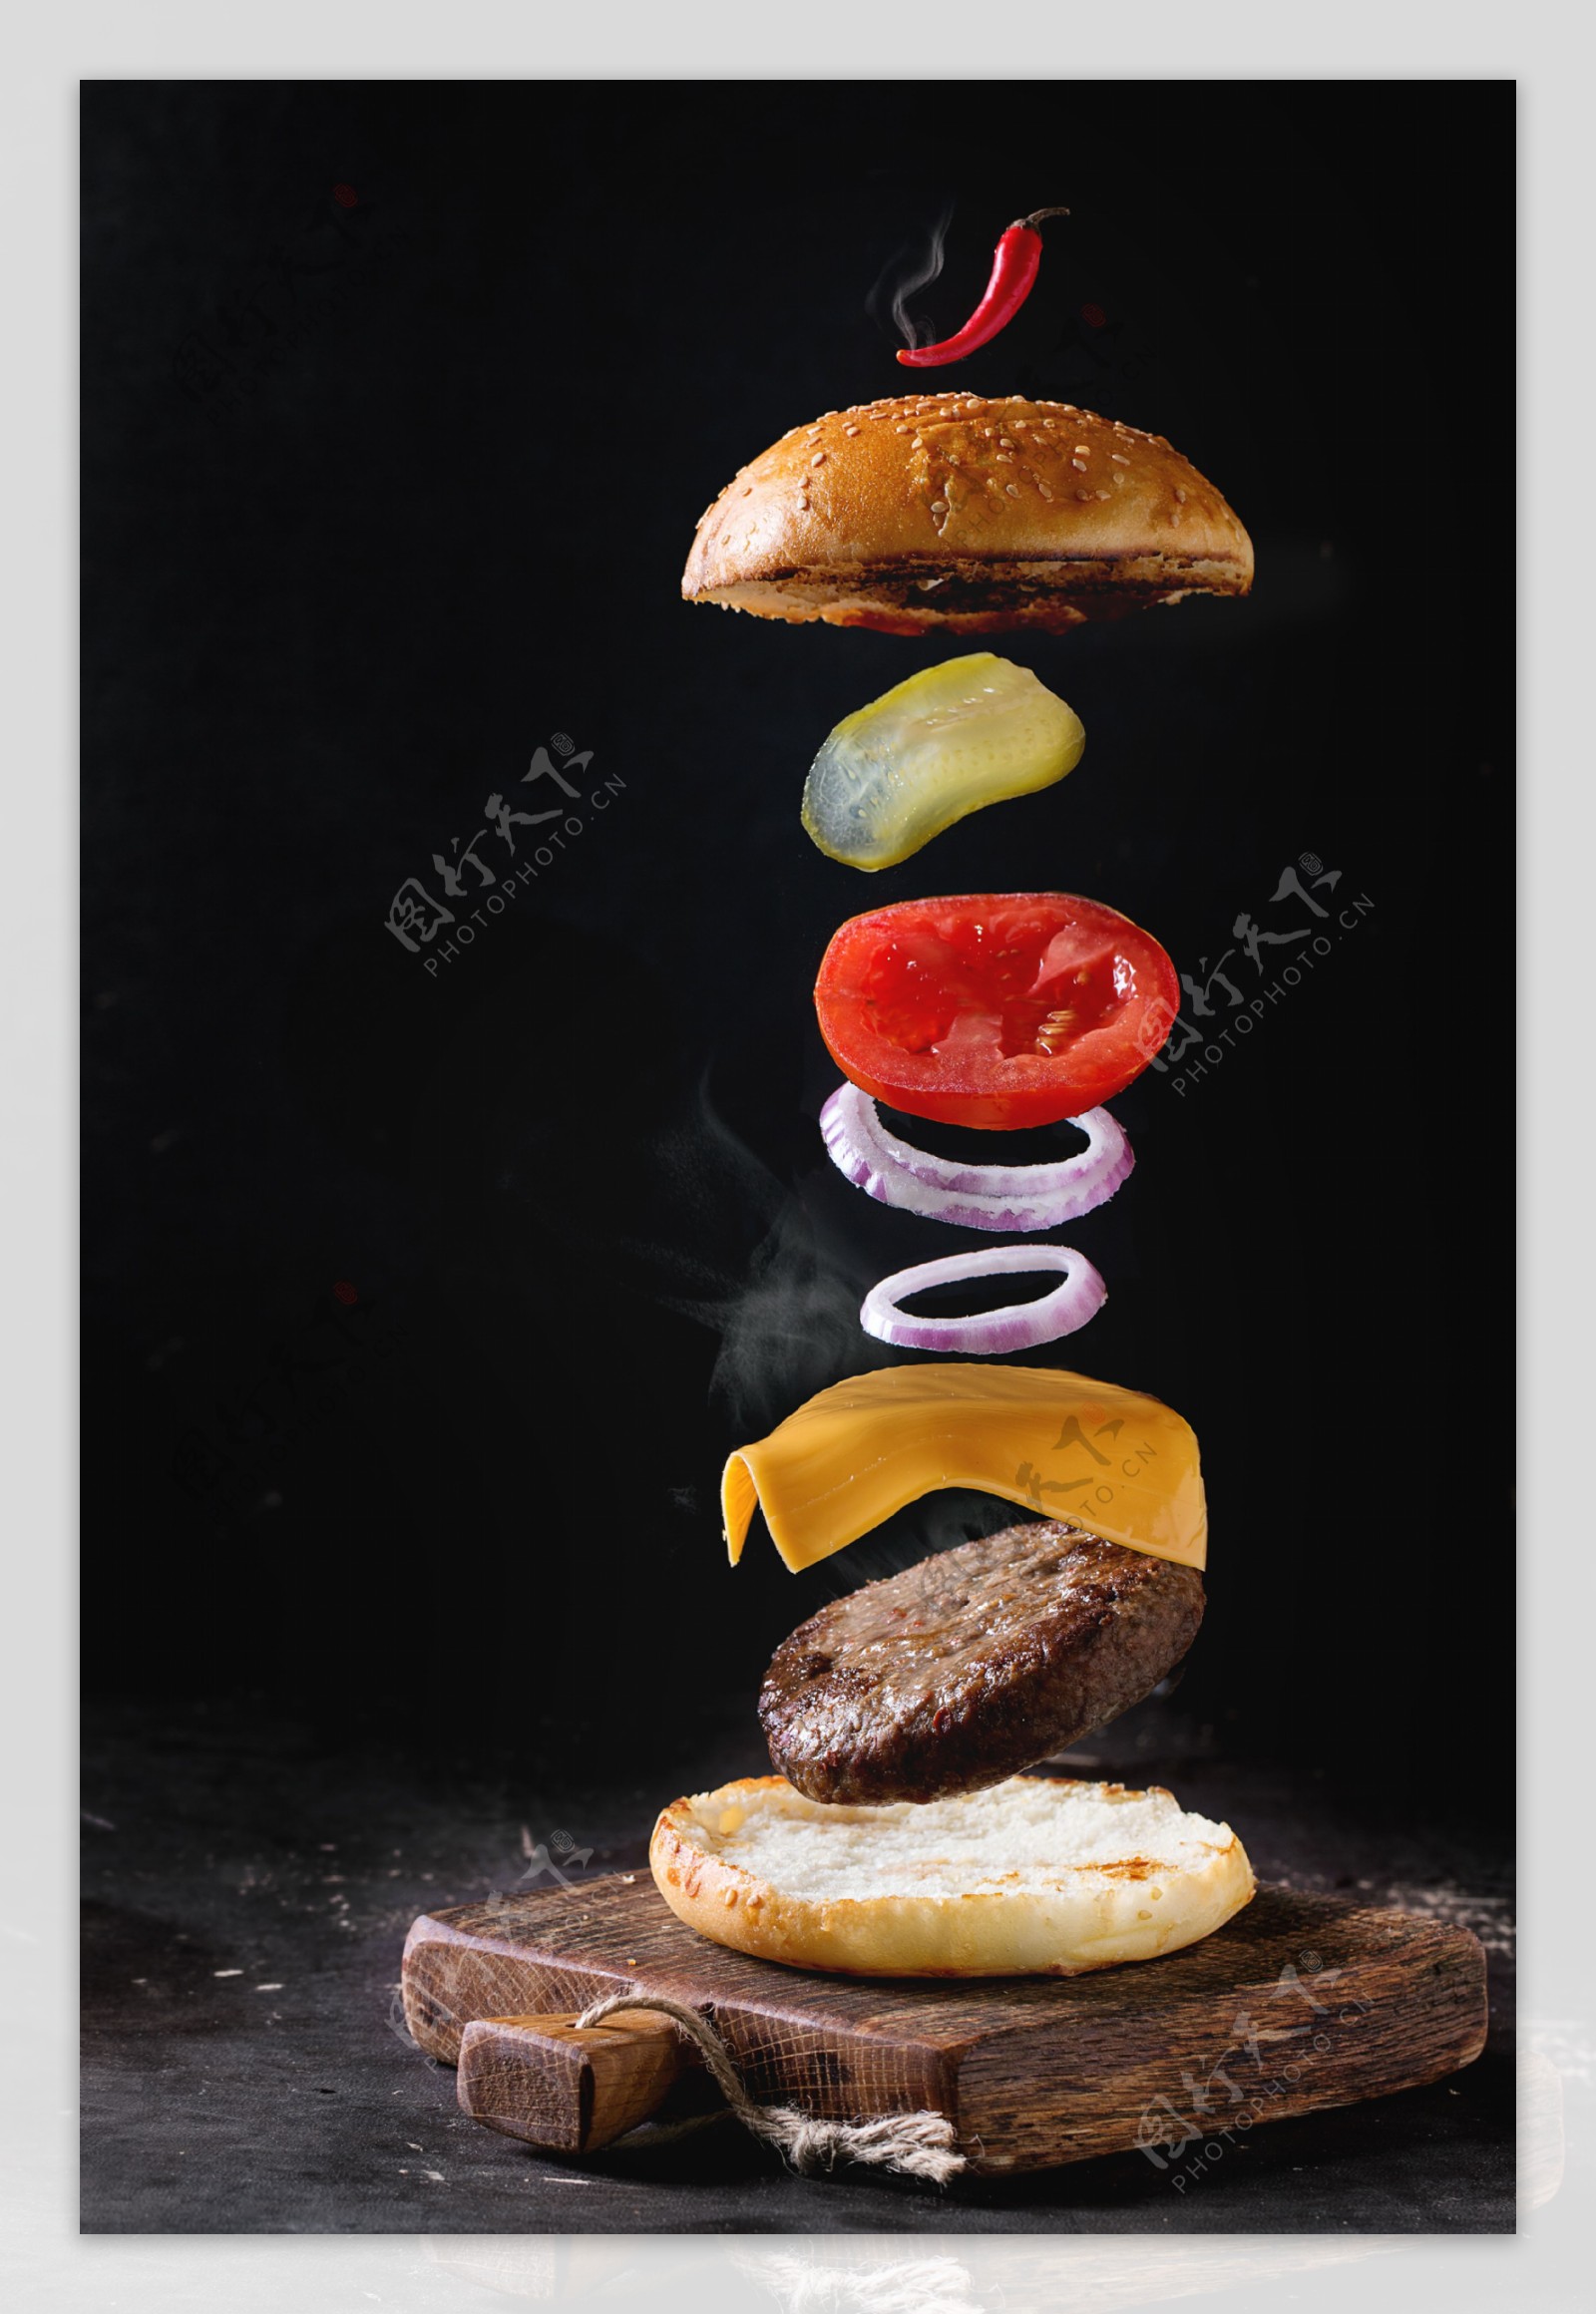 唯美汉堡图片